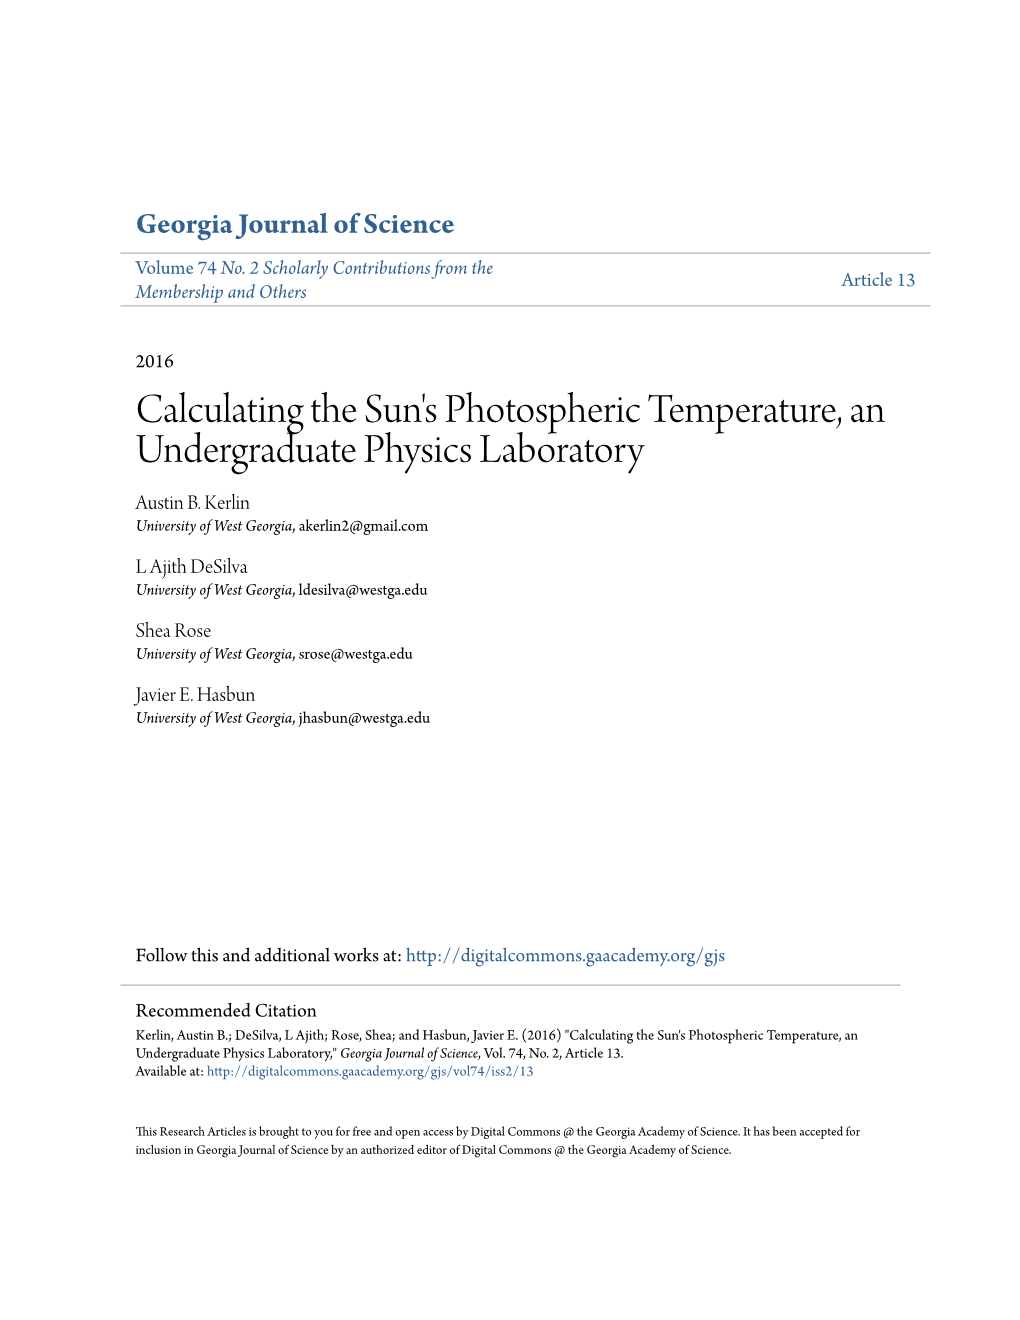 Calculating the Sun's Photospheric Temperature, an Undergraduate Physics Laboratory Austin B